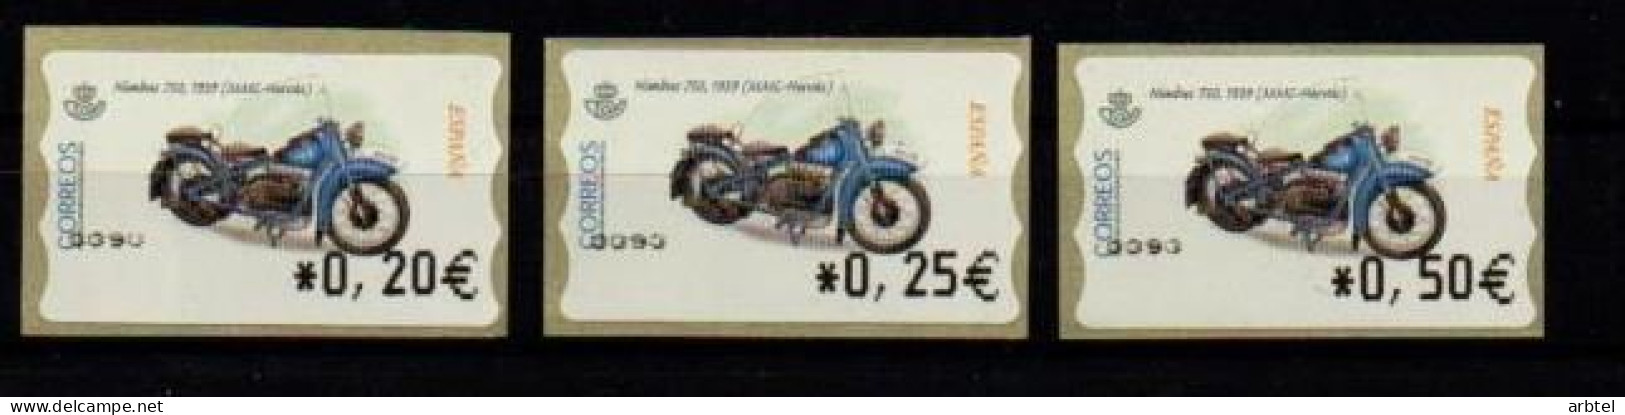 ESPAÑA SPAIN ATM MOTO MOTORCYCLE NIMBUS 750 - Motorbikes